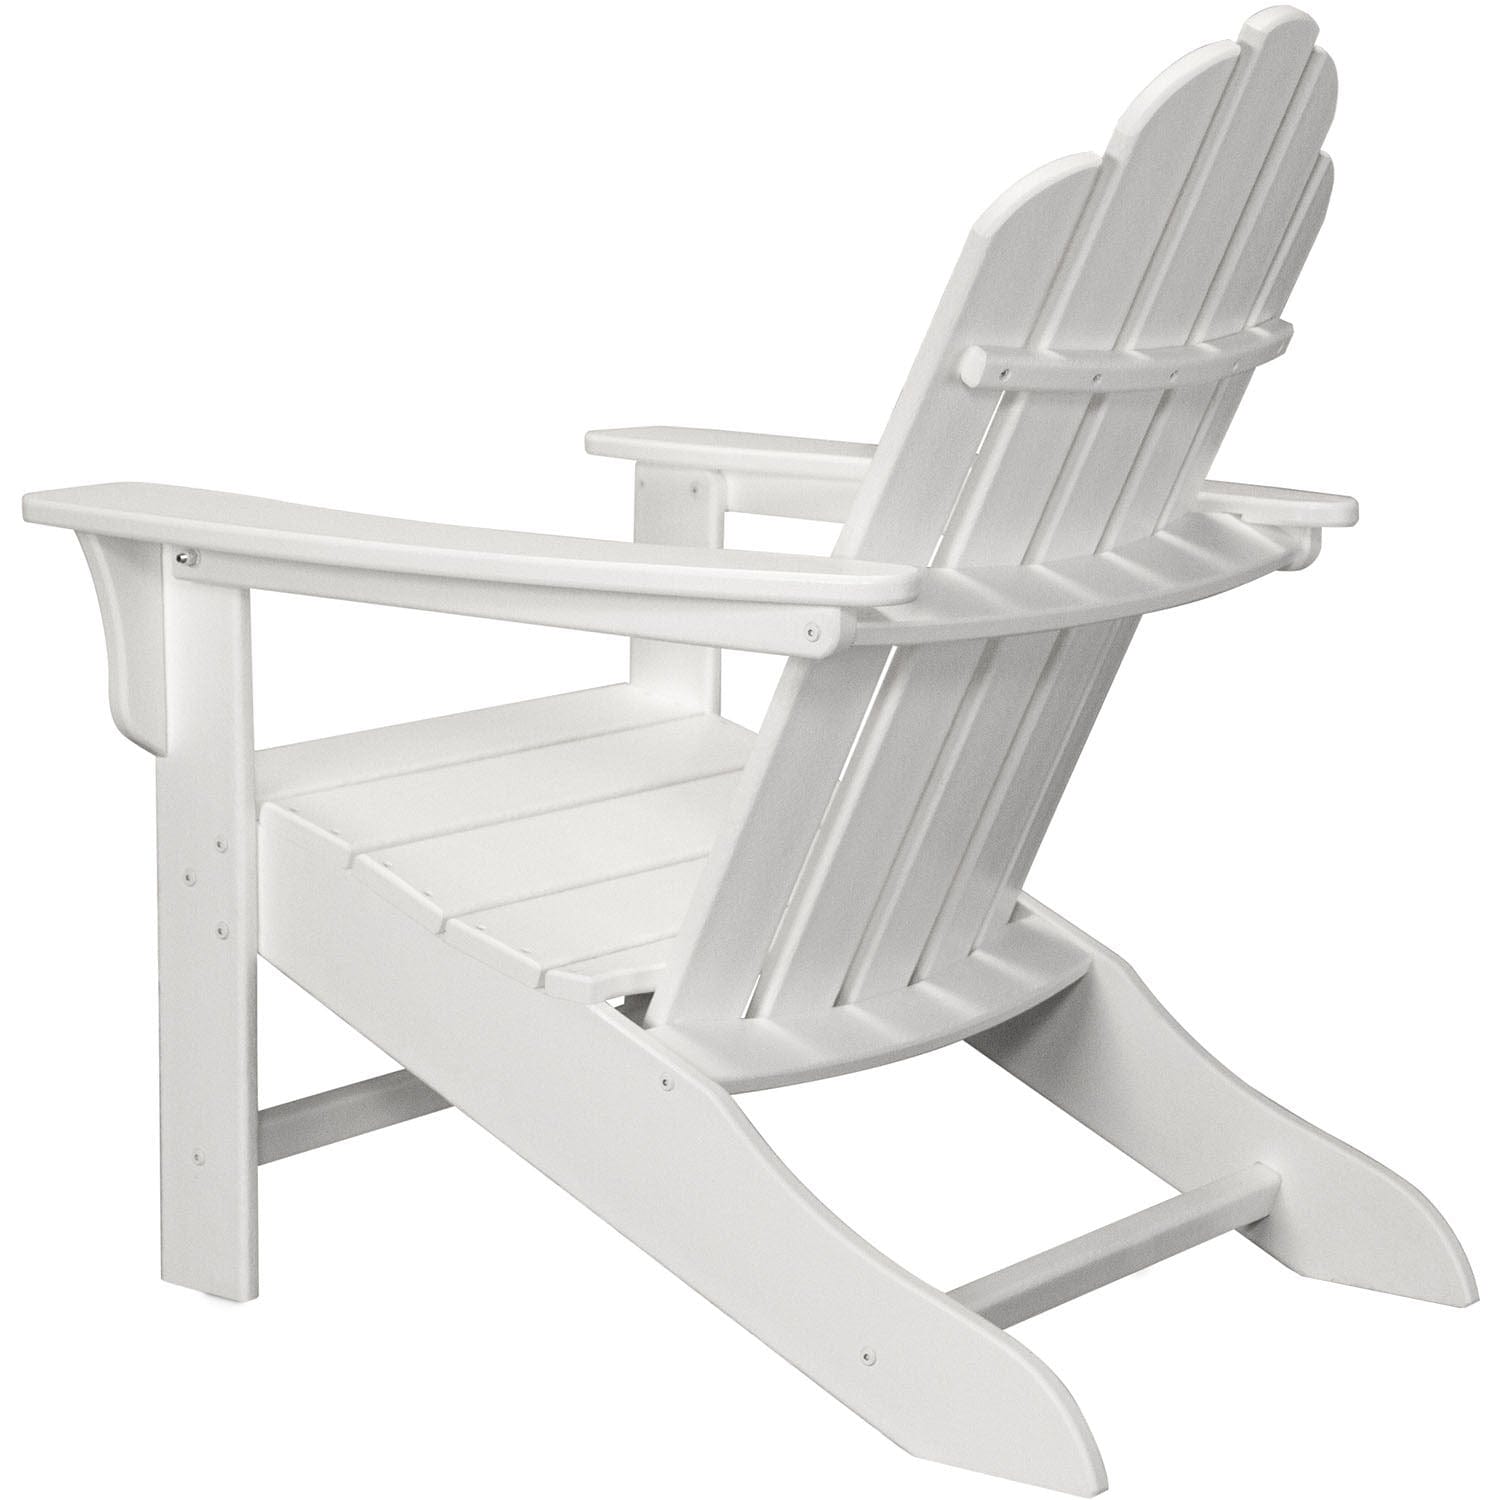 Hanover Adirondack Chairs Hanover | All-Weather Contoured Adirondack Chair - White | HVLNA10WH